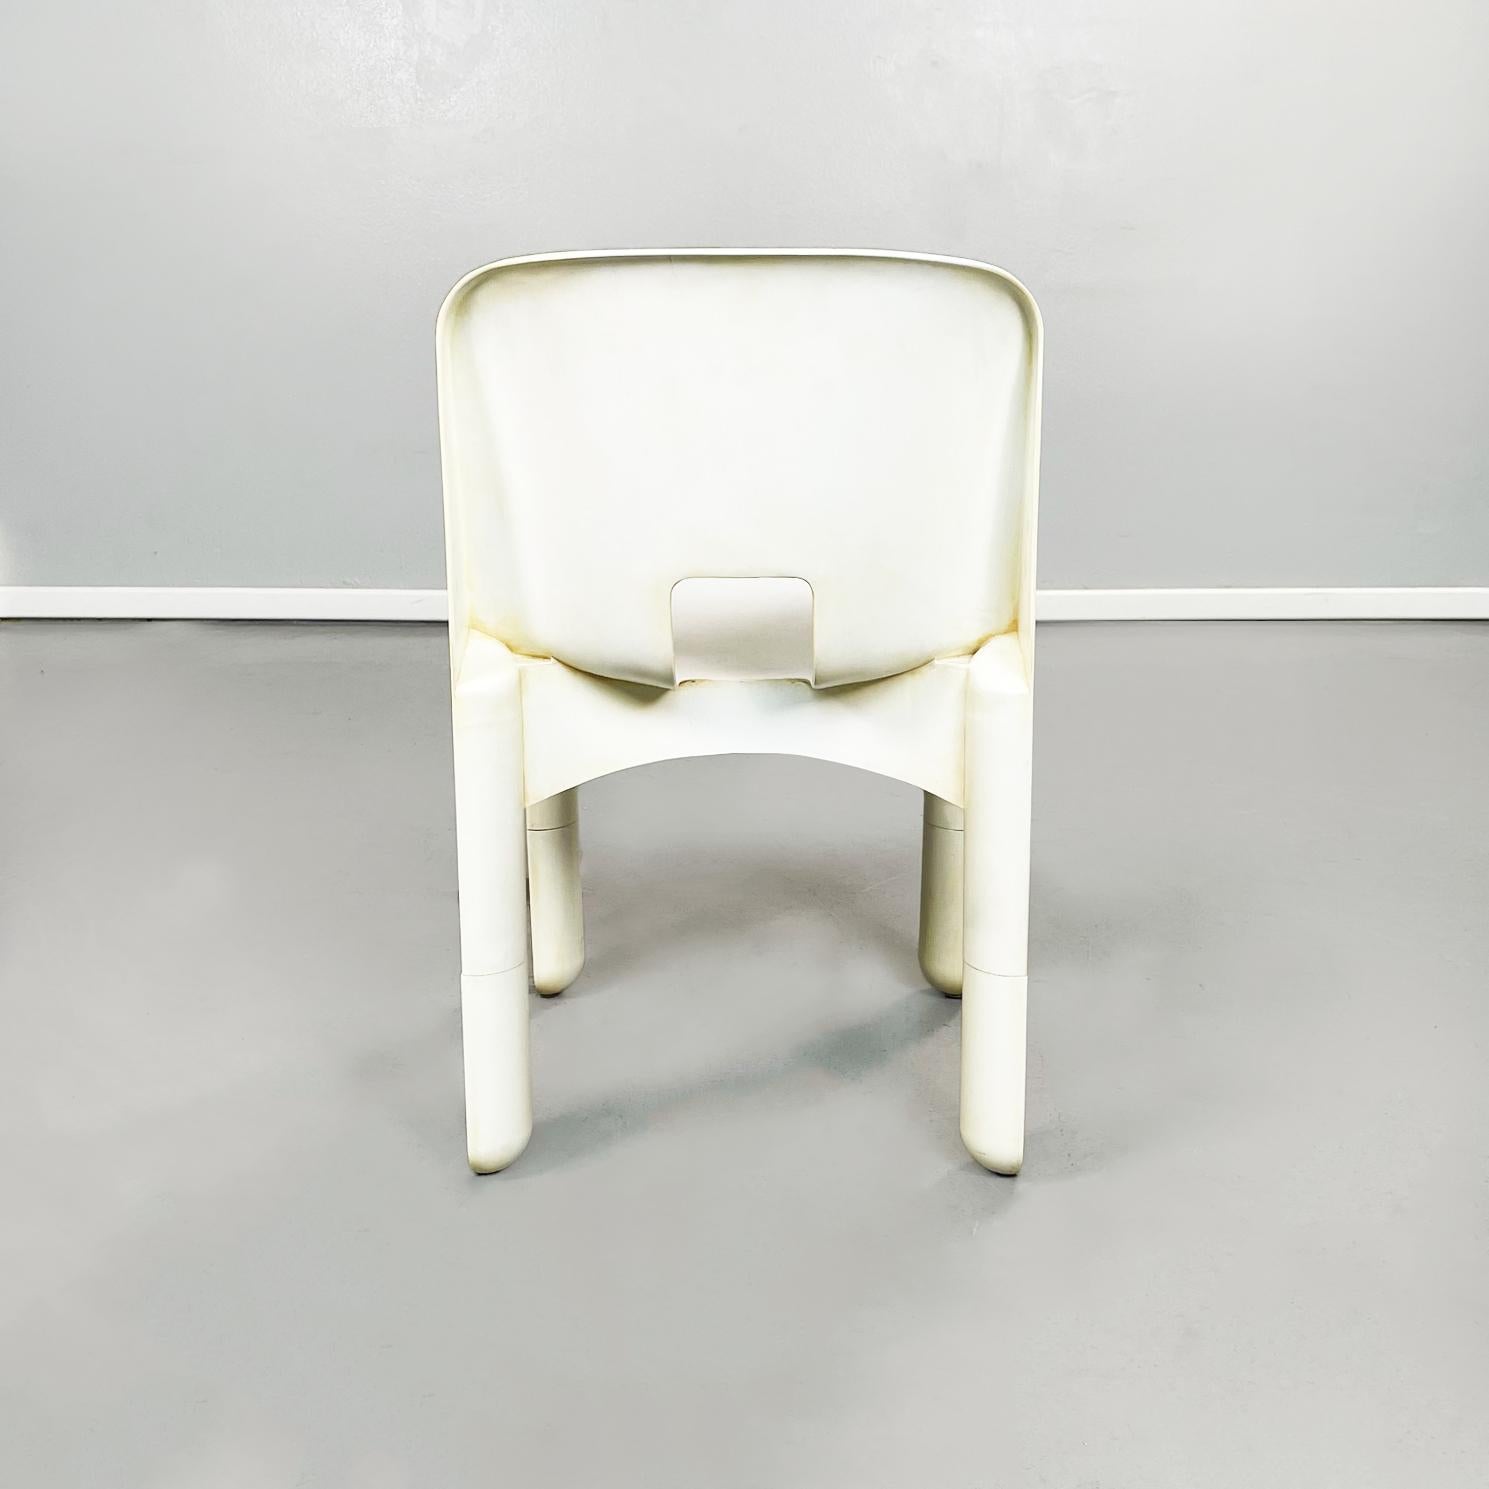 Mid-Century Modern Italian Mid-Century White Plastic Chairs 860 by Joe Colombo for Kartell, 1970s